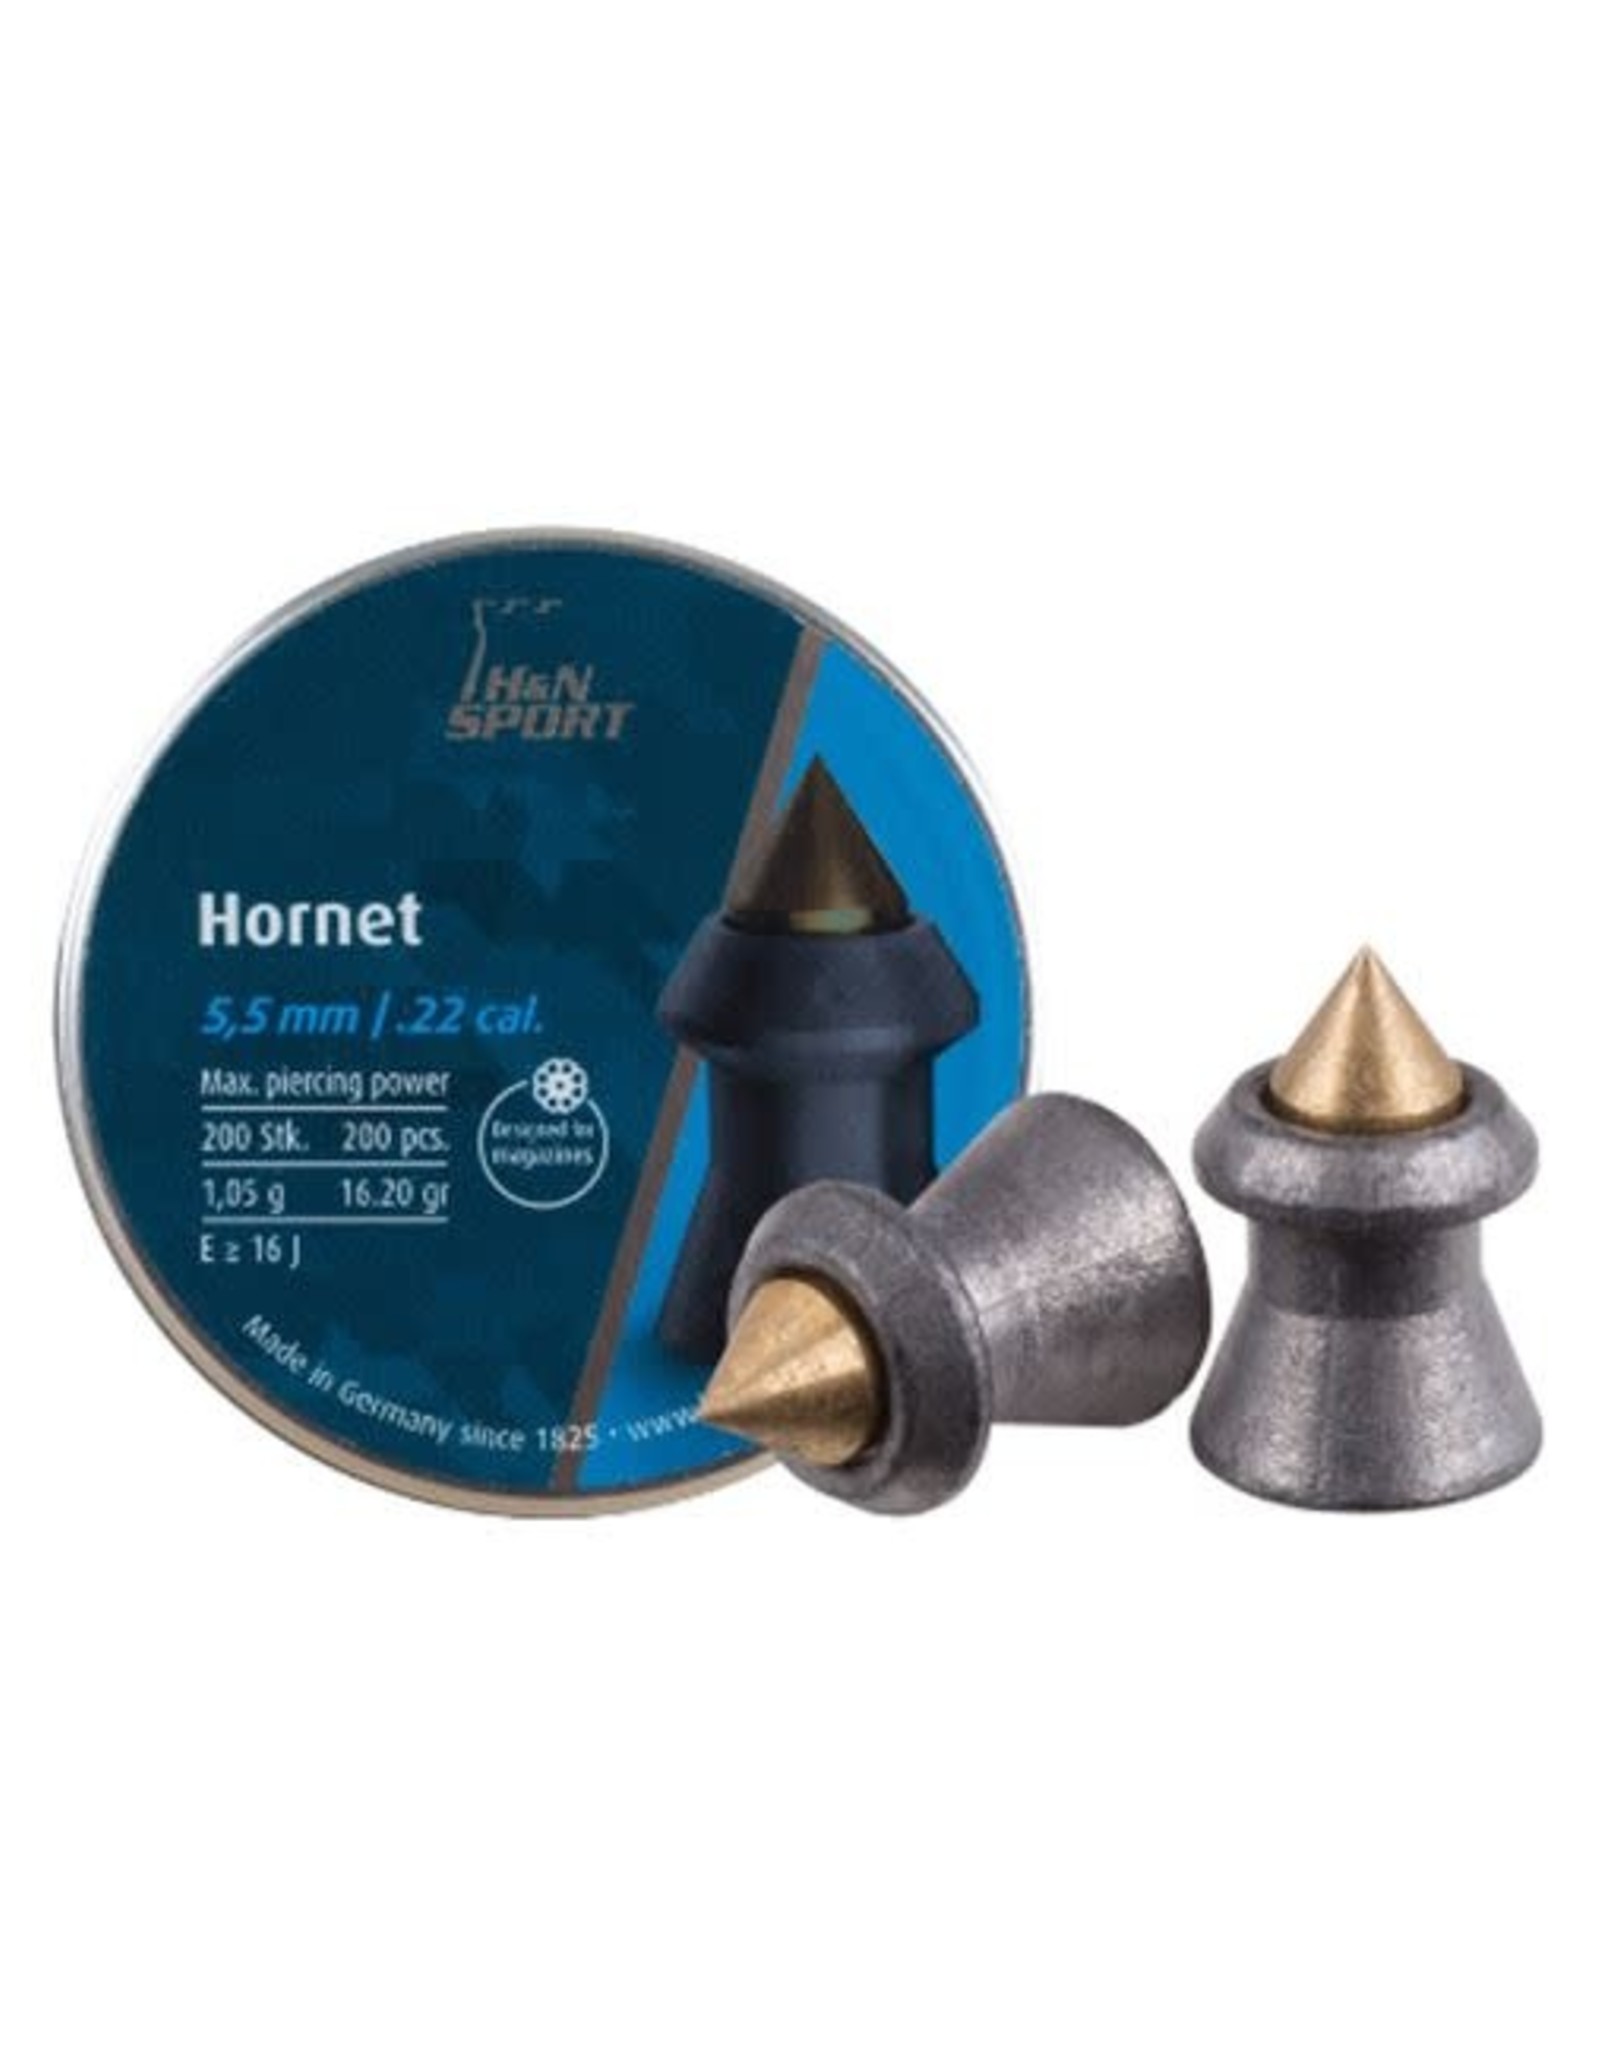 H&N Sport H&N Hornet Lead Pointed Pellets .38 Long (9.6mm) .22 Caliber (5.5mm) 16.2 Grains - 200 Rounds